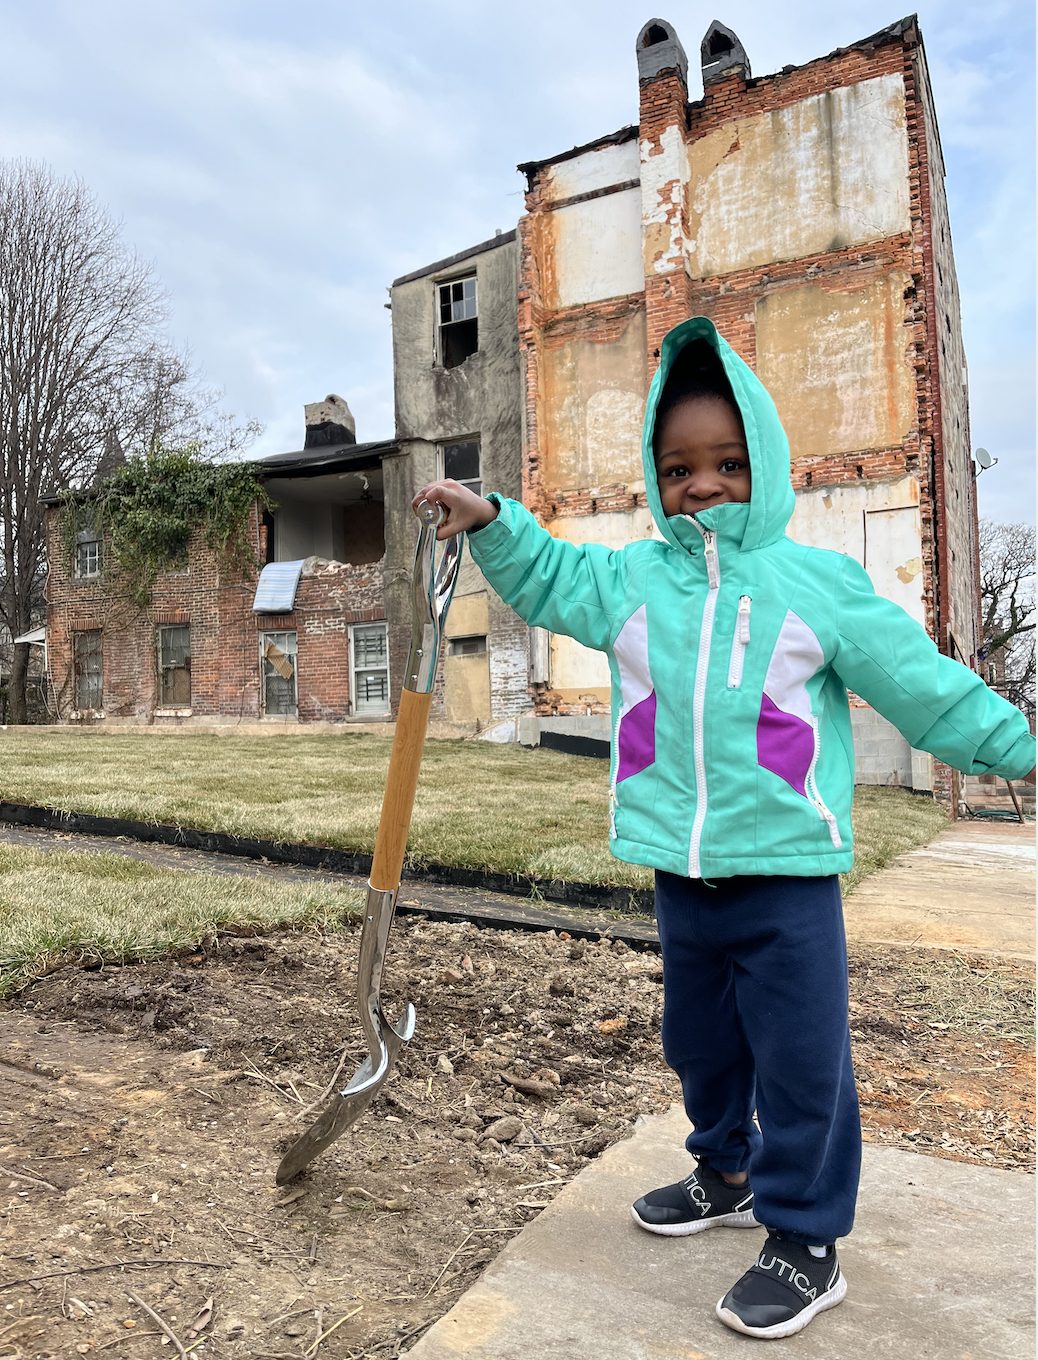 Little girl with shovel at park groundbreaking